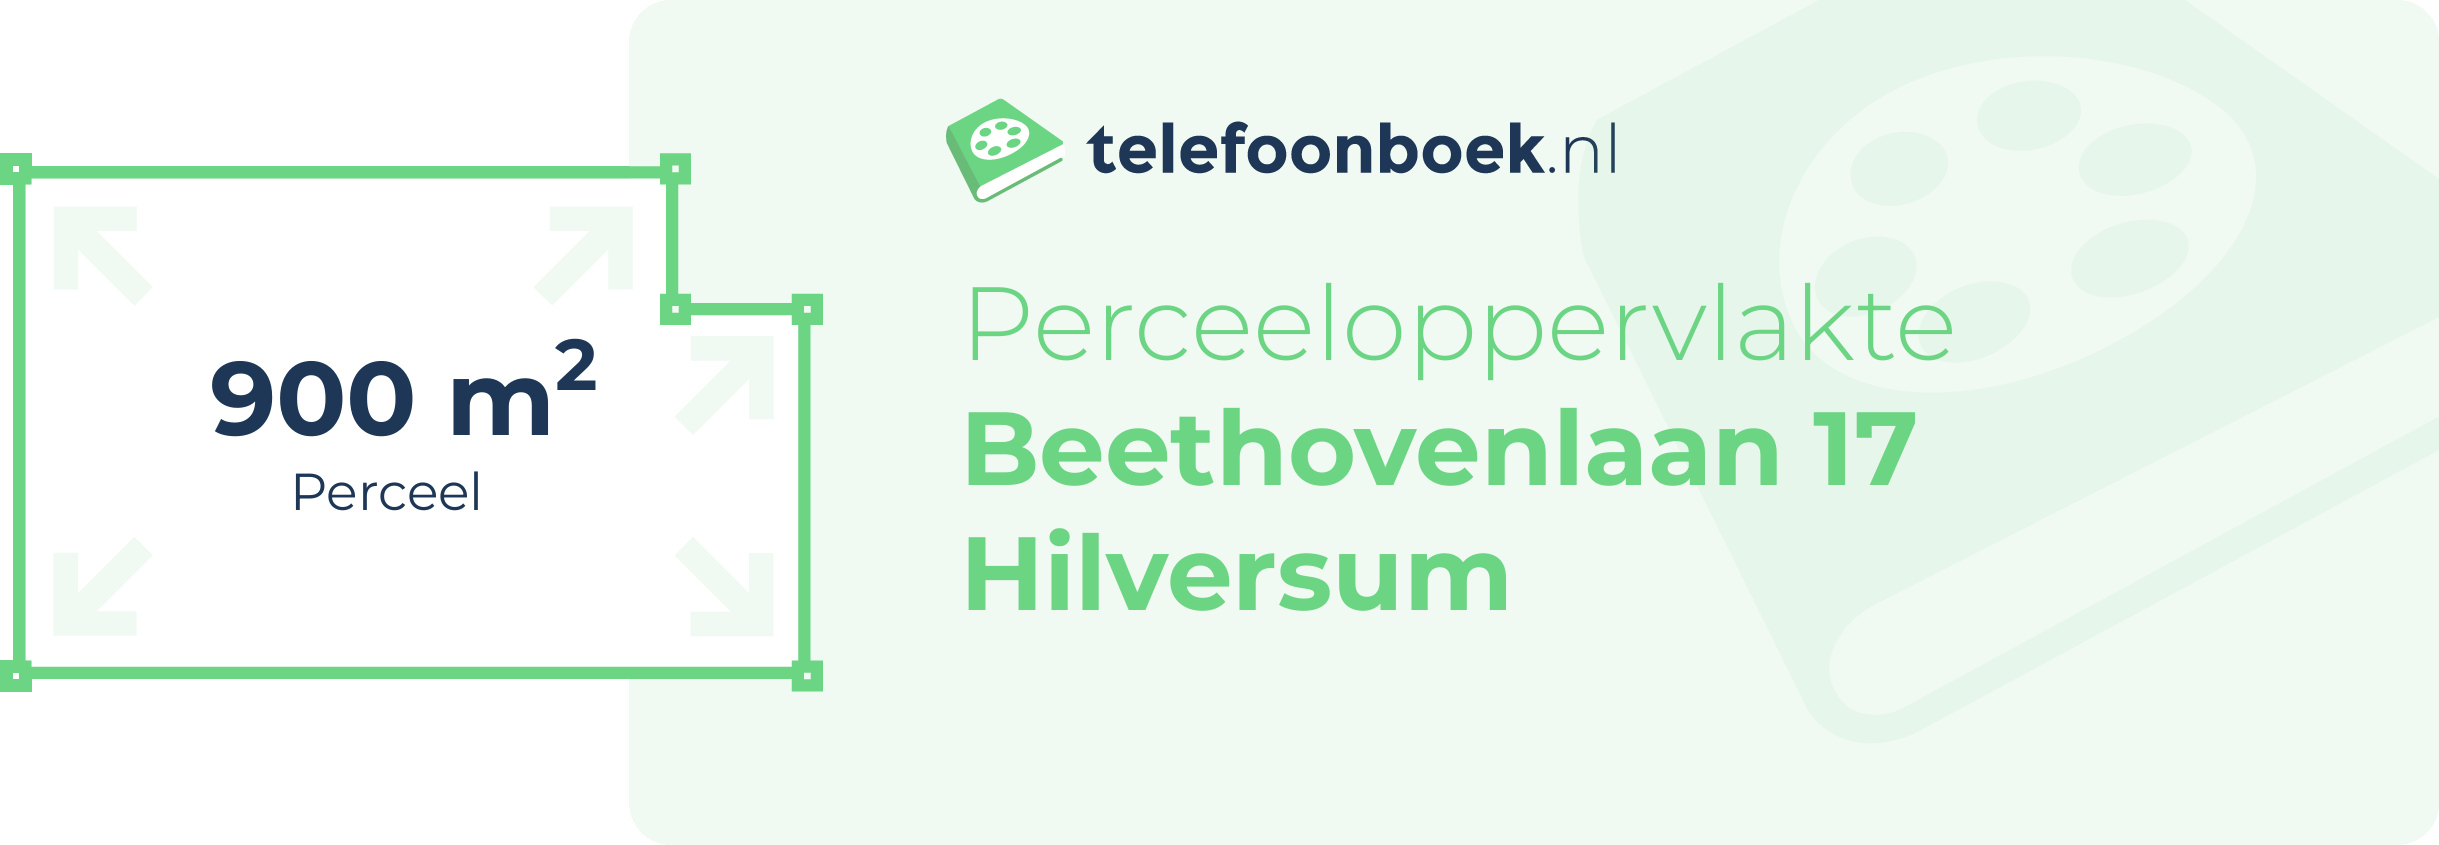 Perceeloppervlakte Beethovenlaan 17 Hilversum